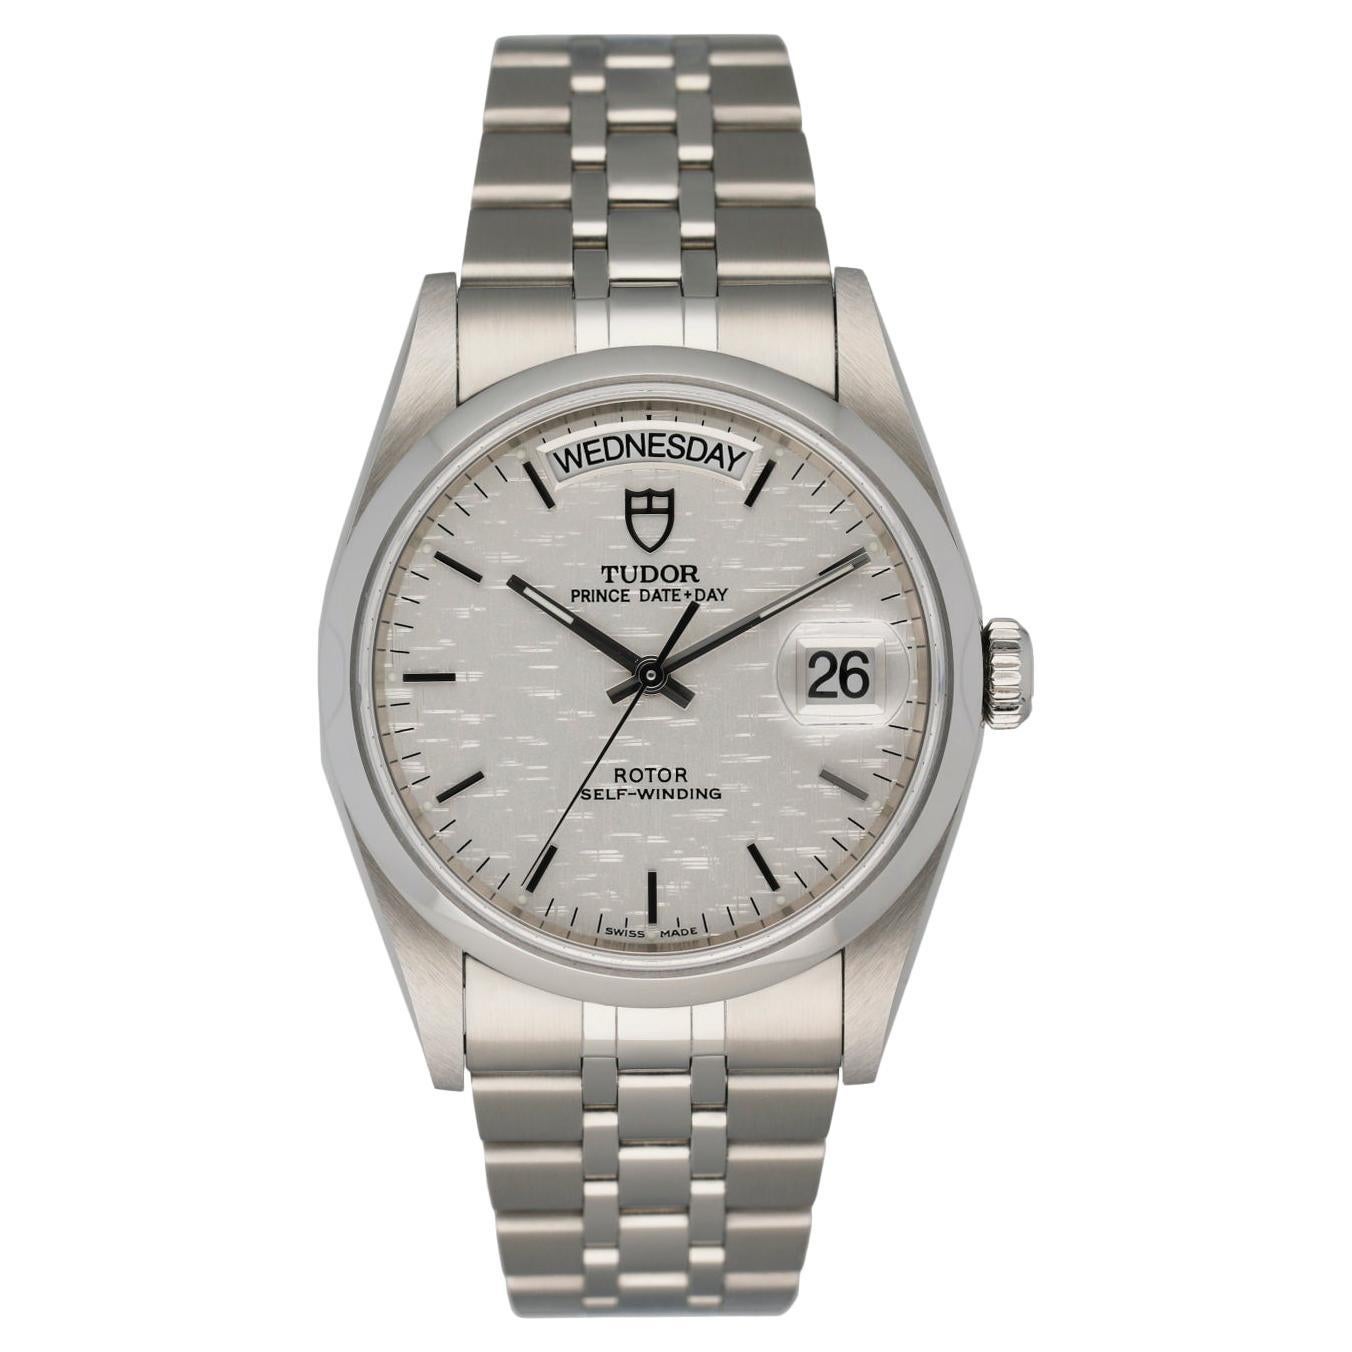 Tudor Date-Day 76200 Automatic Linen Dial Men's Watch Box & Paper